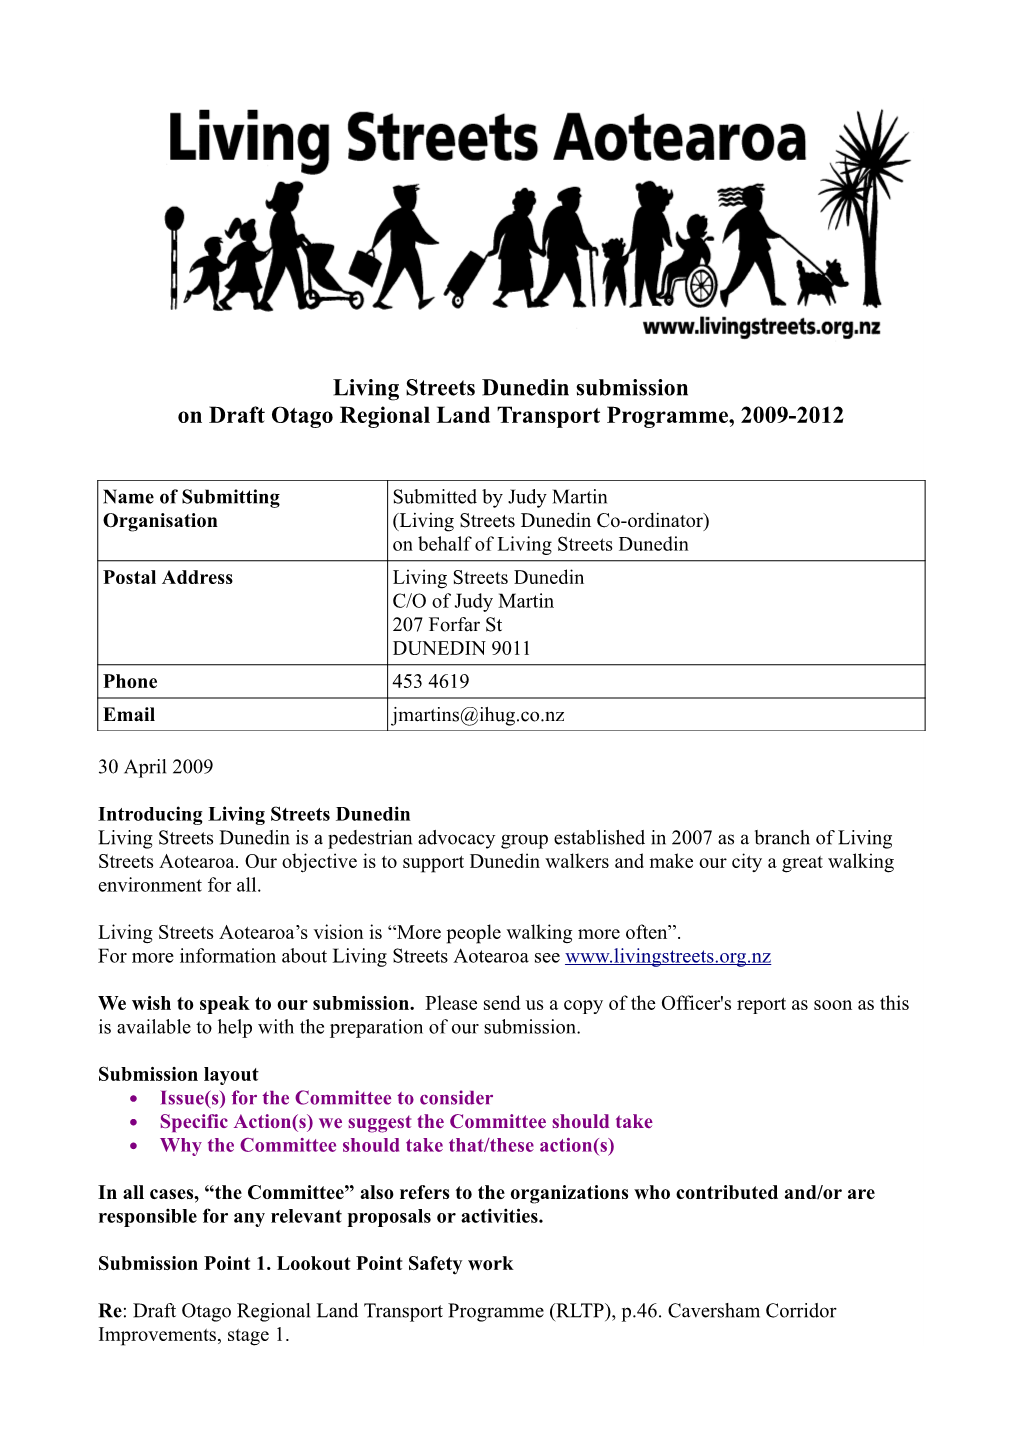 Living Streets Dunedin Submission on Draft Otago Regional Land Transport Programme, 2009-2012